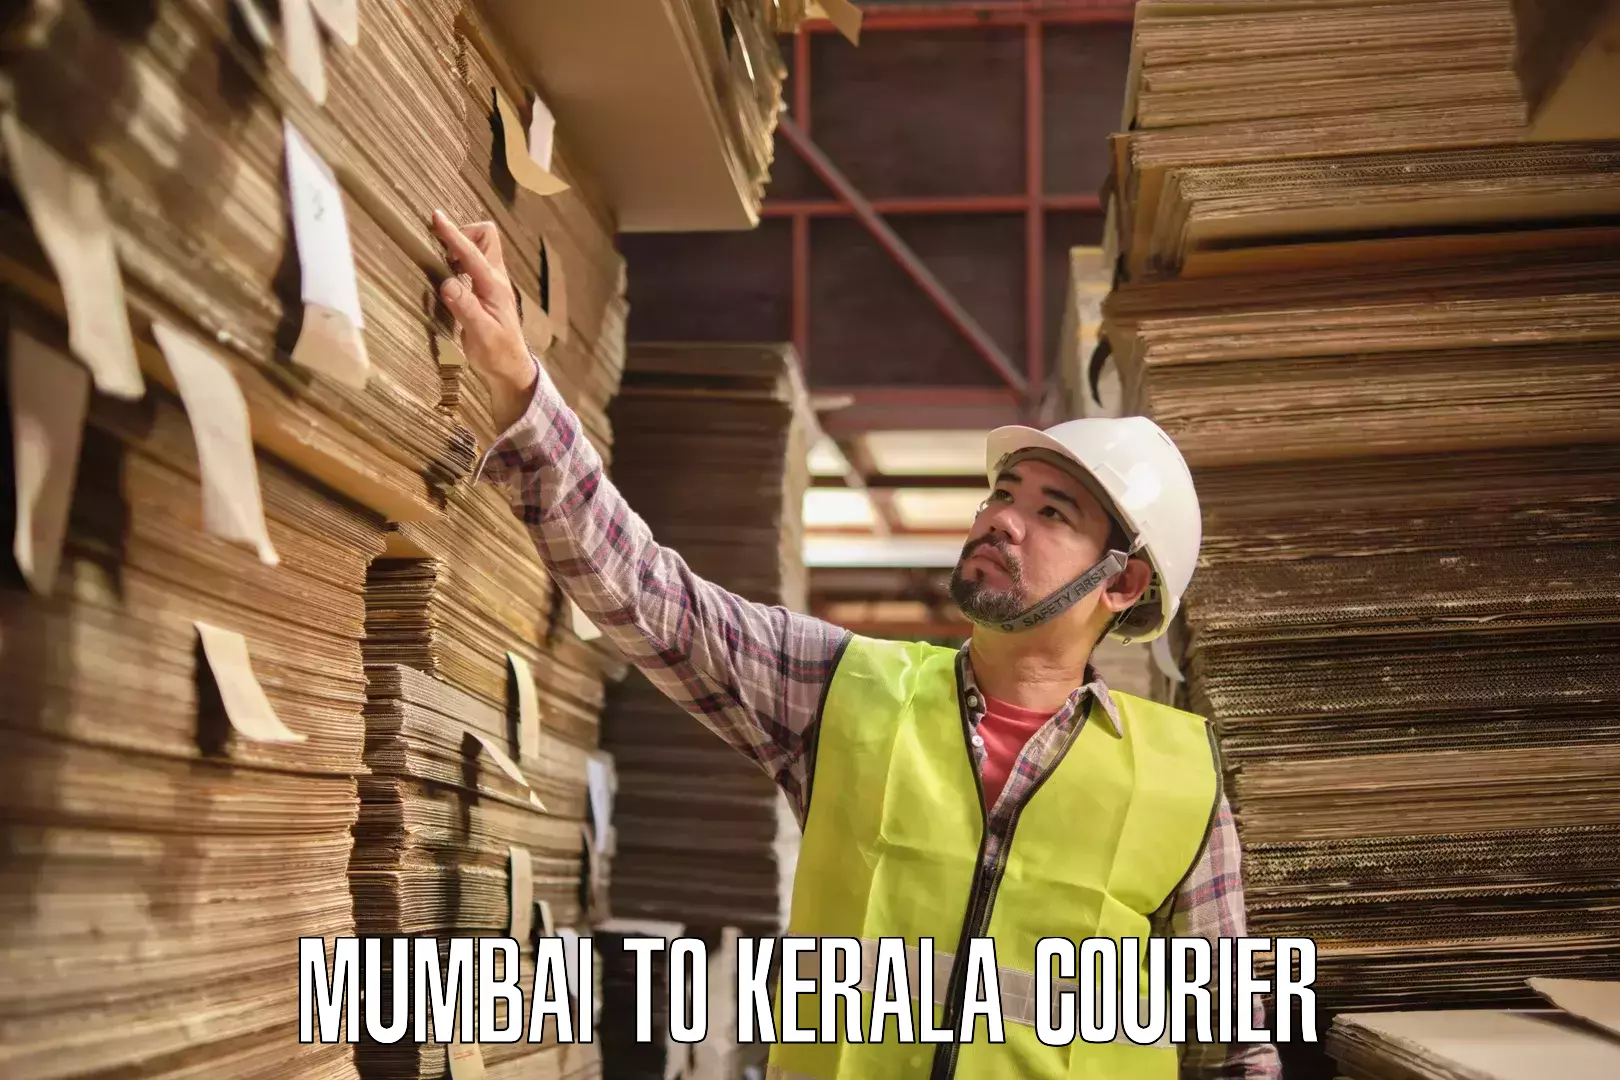 Courier rate comparison Mumbai to Changanacherry